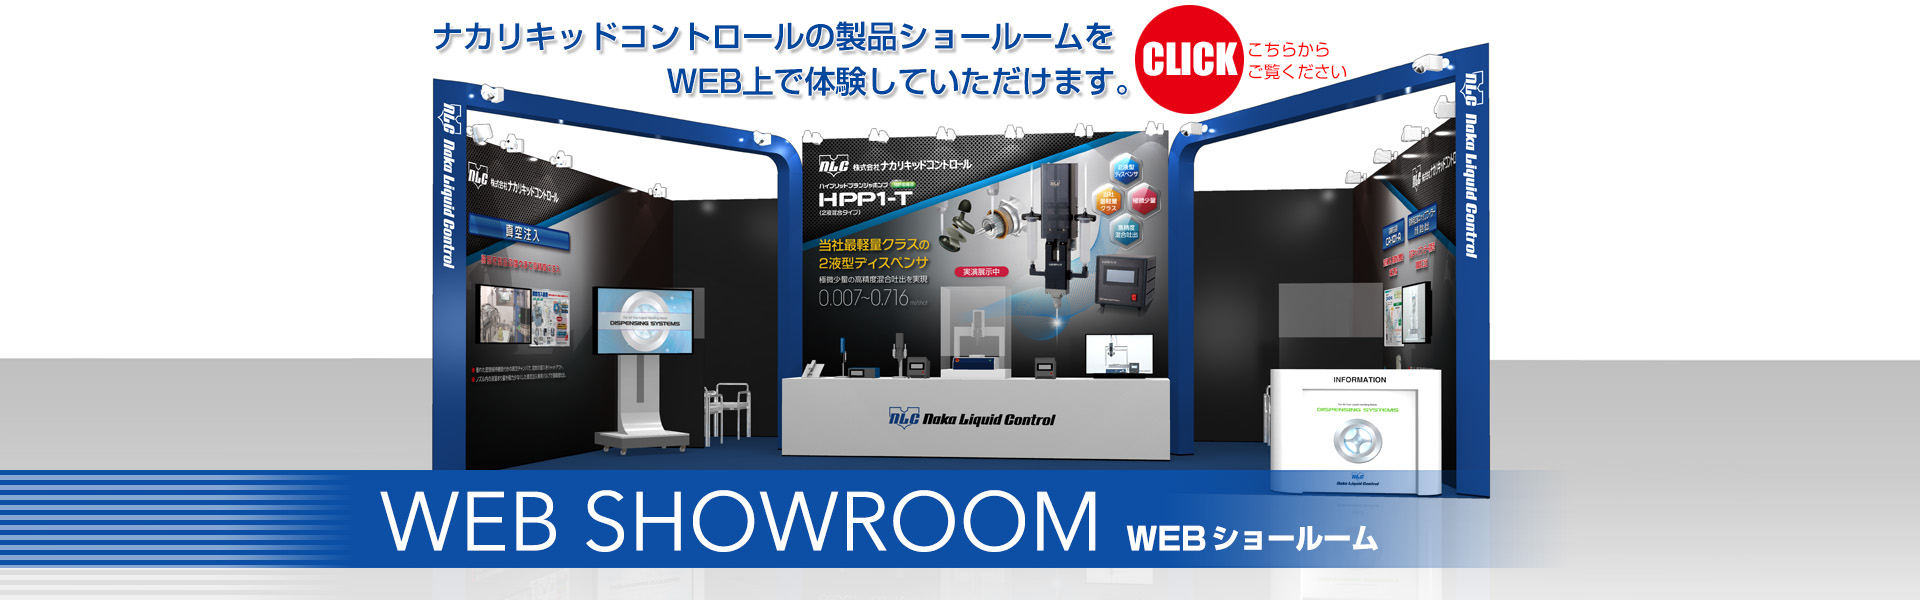 web showroom